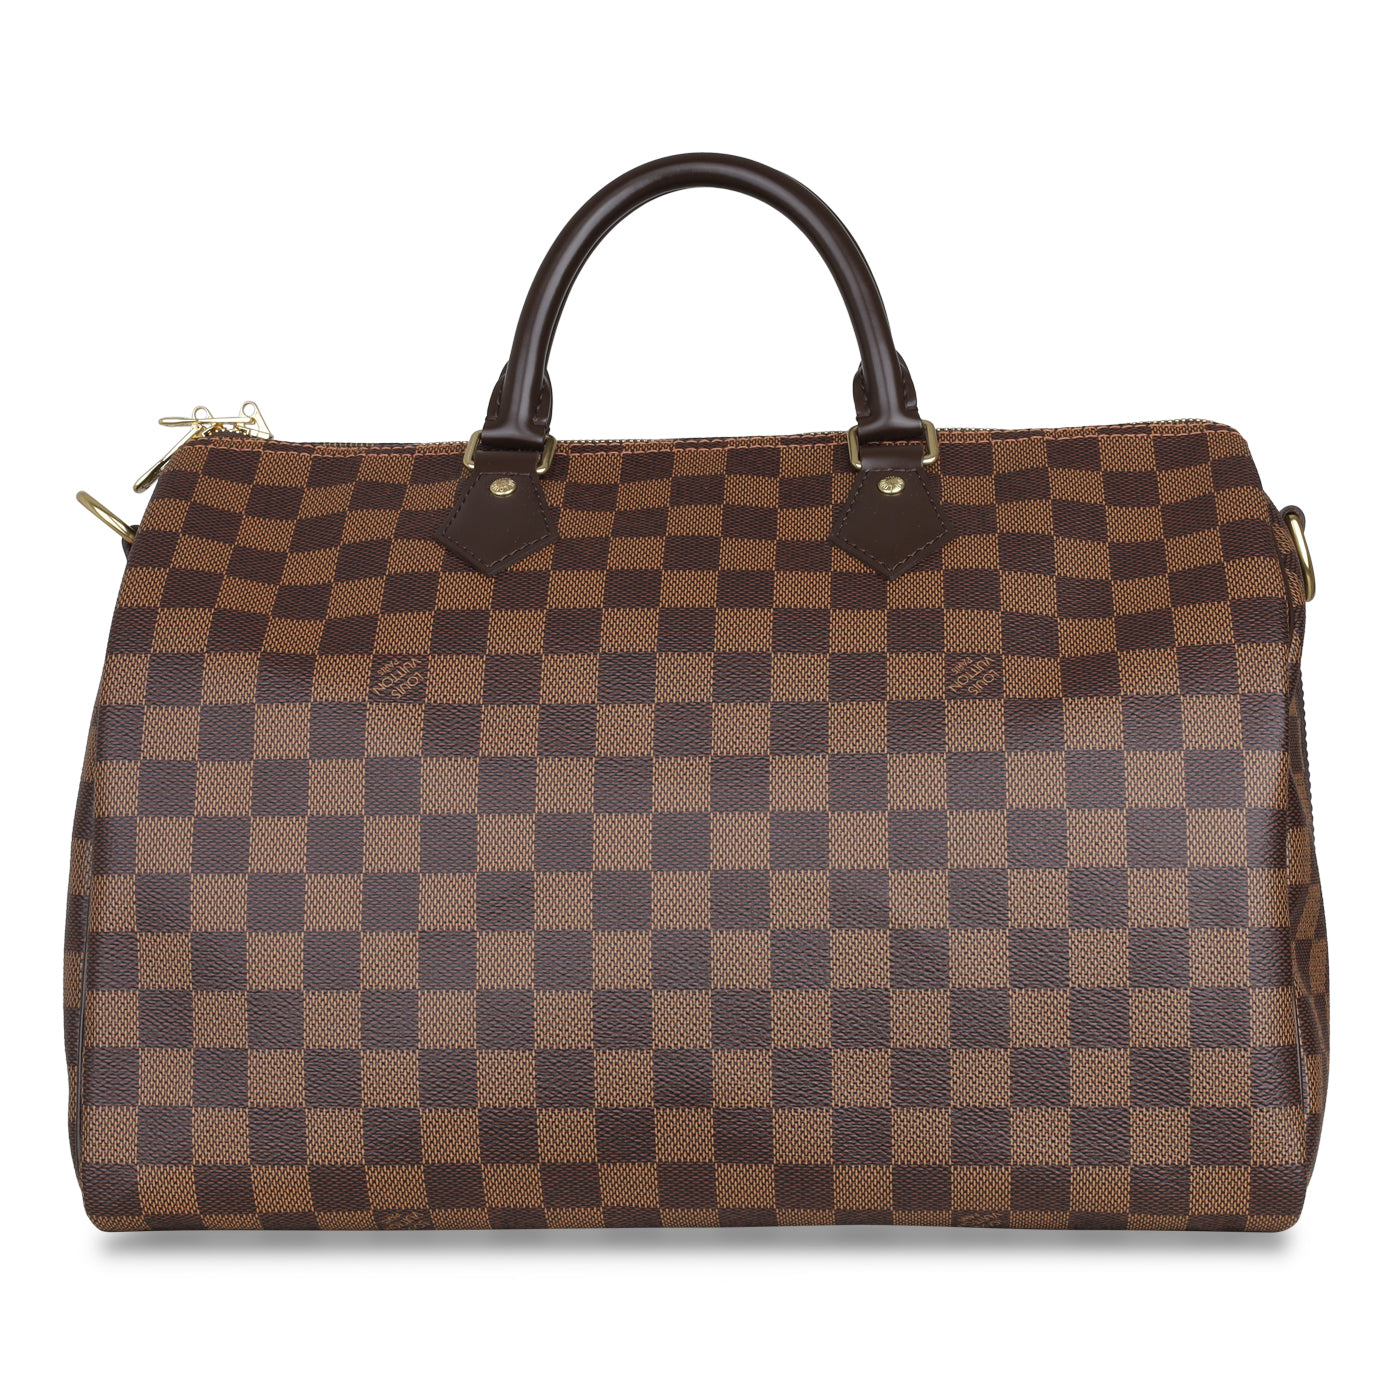 Louis Vuitton Damier Ebene Speedy 35 Bag